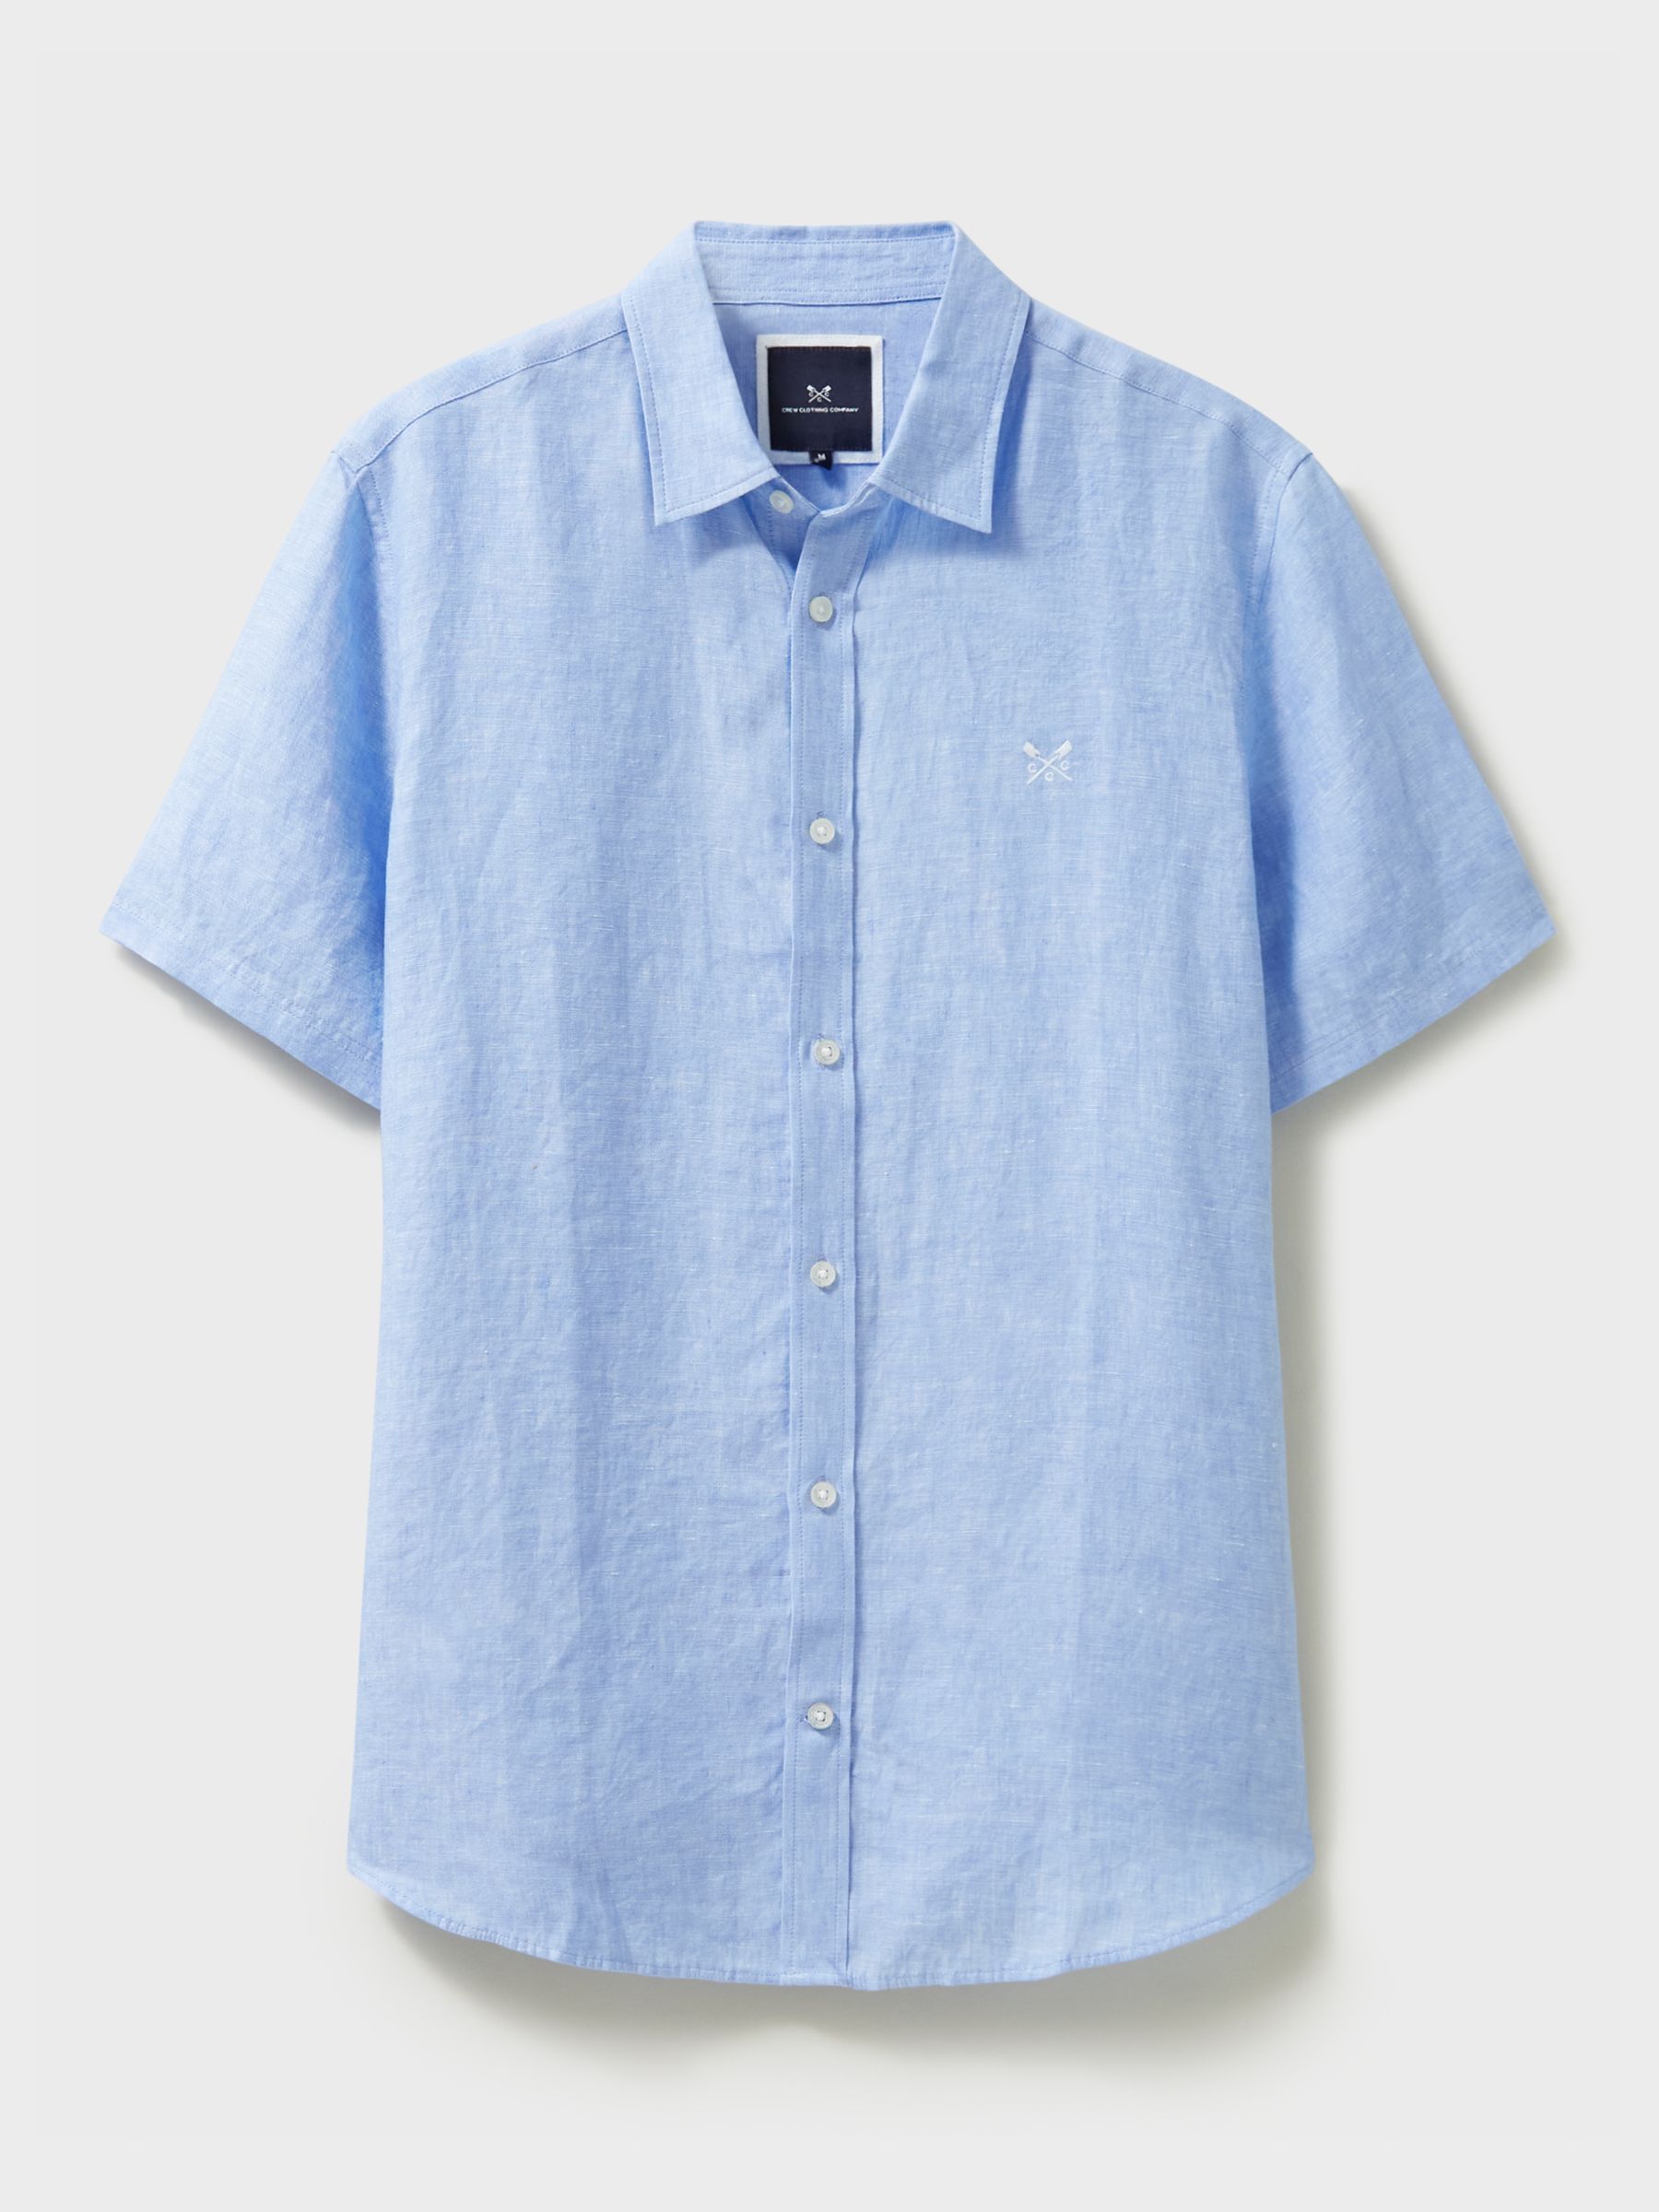 Crew Clothing Linen Short Sleeve Shirt, Sky Blue, L